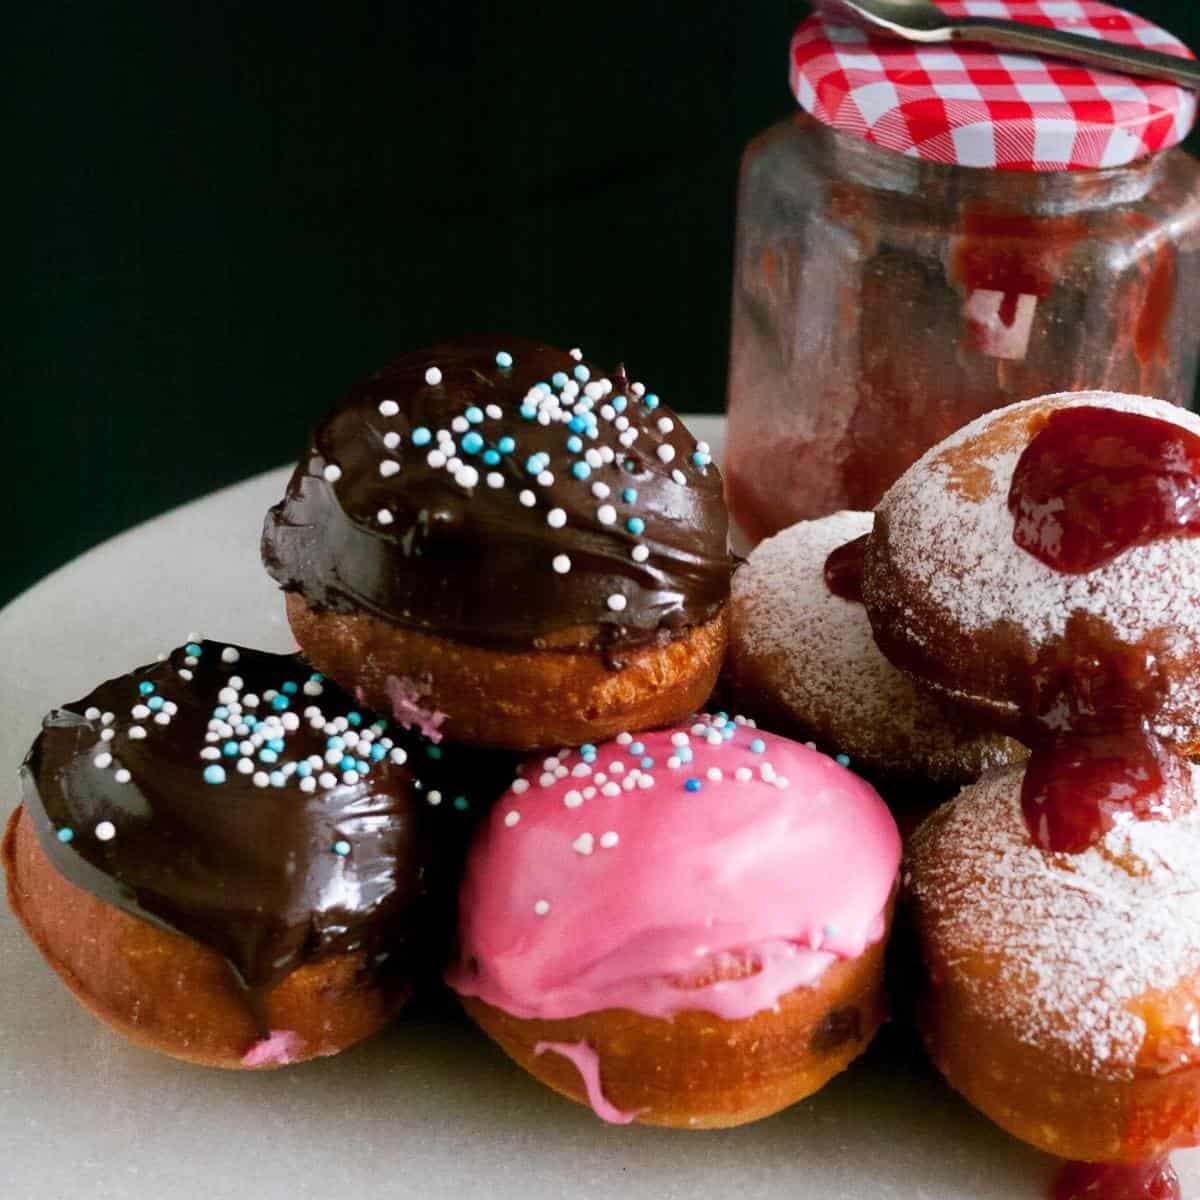 Chocolate doughnuts on a cake stand